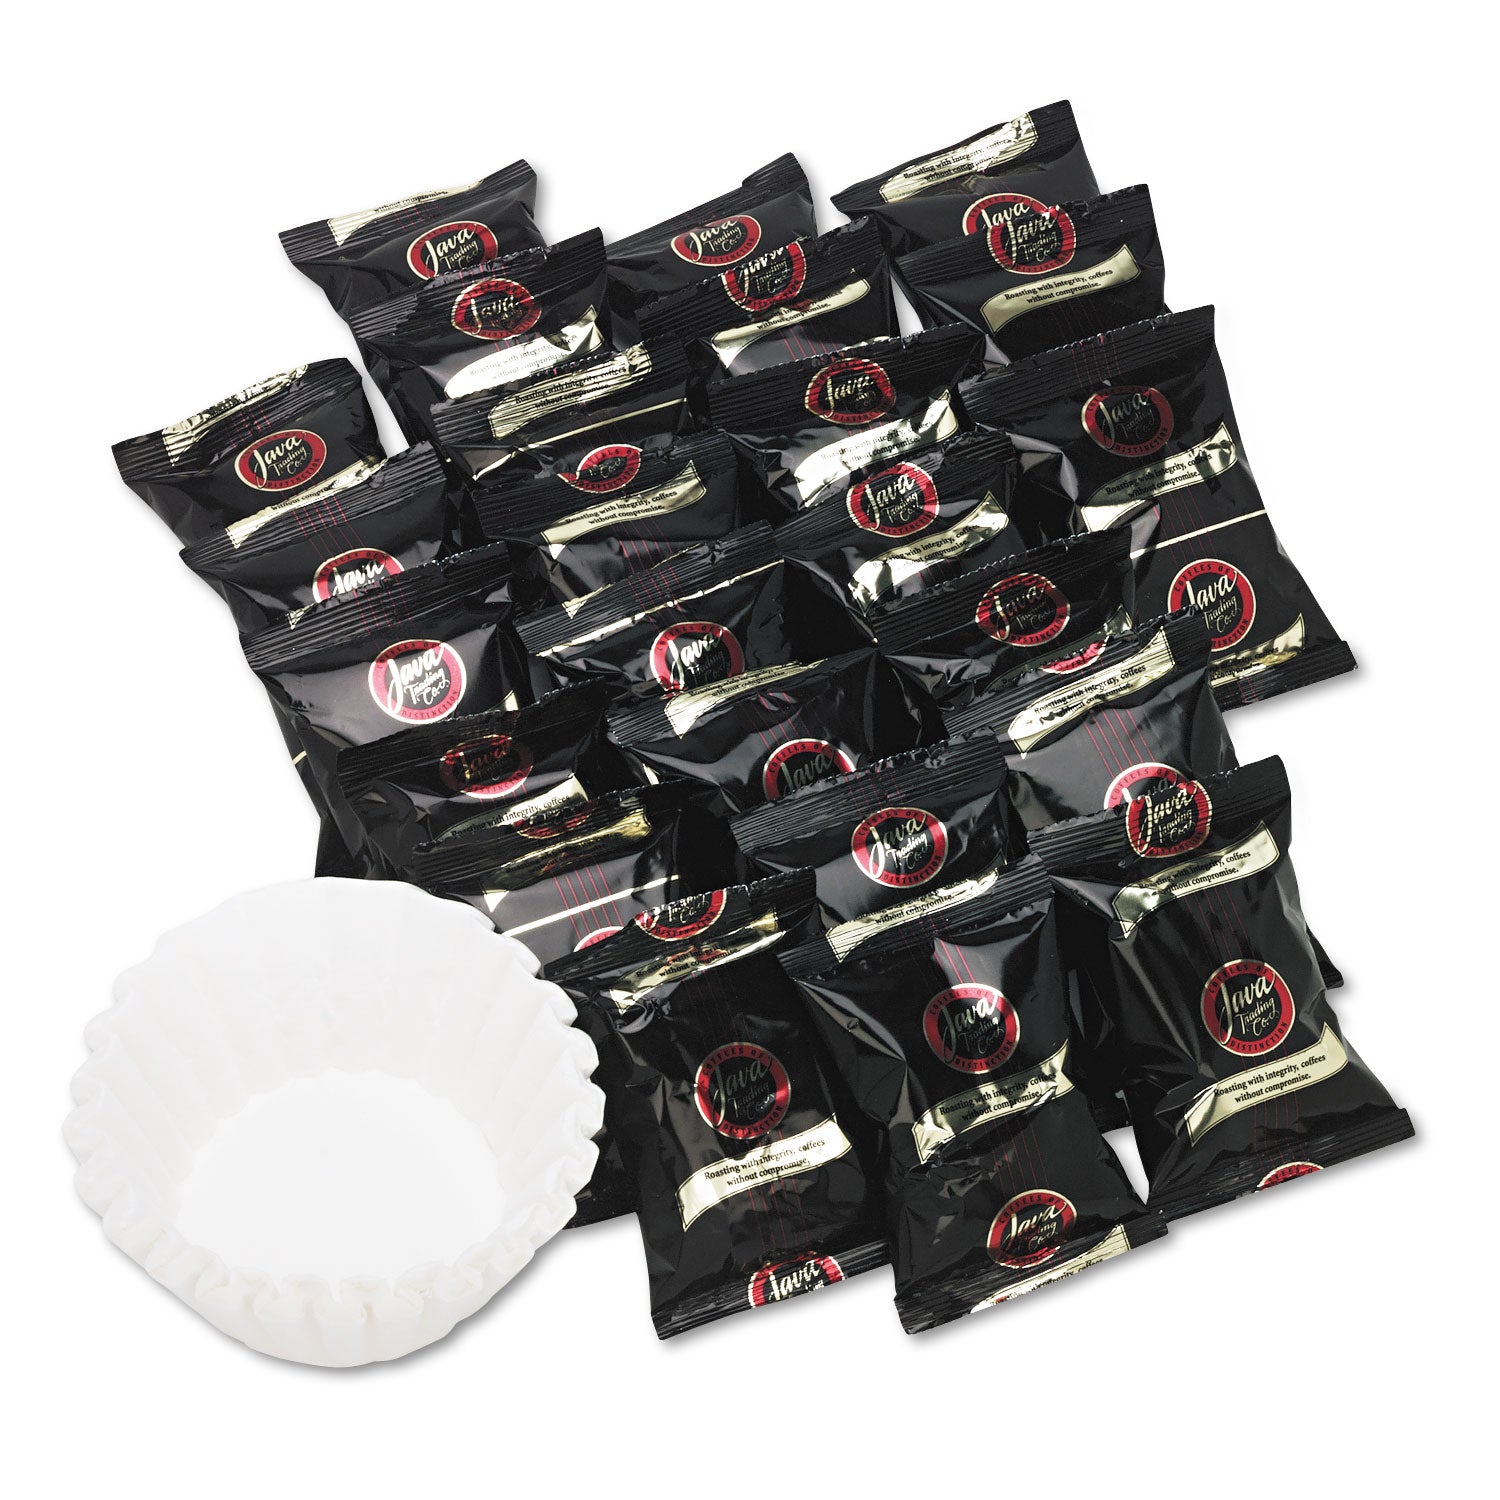 Coffee Portion Packs, 1.5oz Packs, Hazelnut Creme, 24/Carton - 